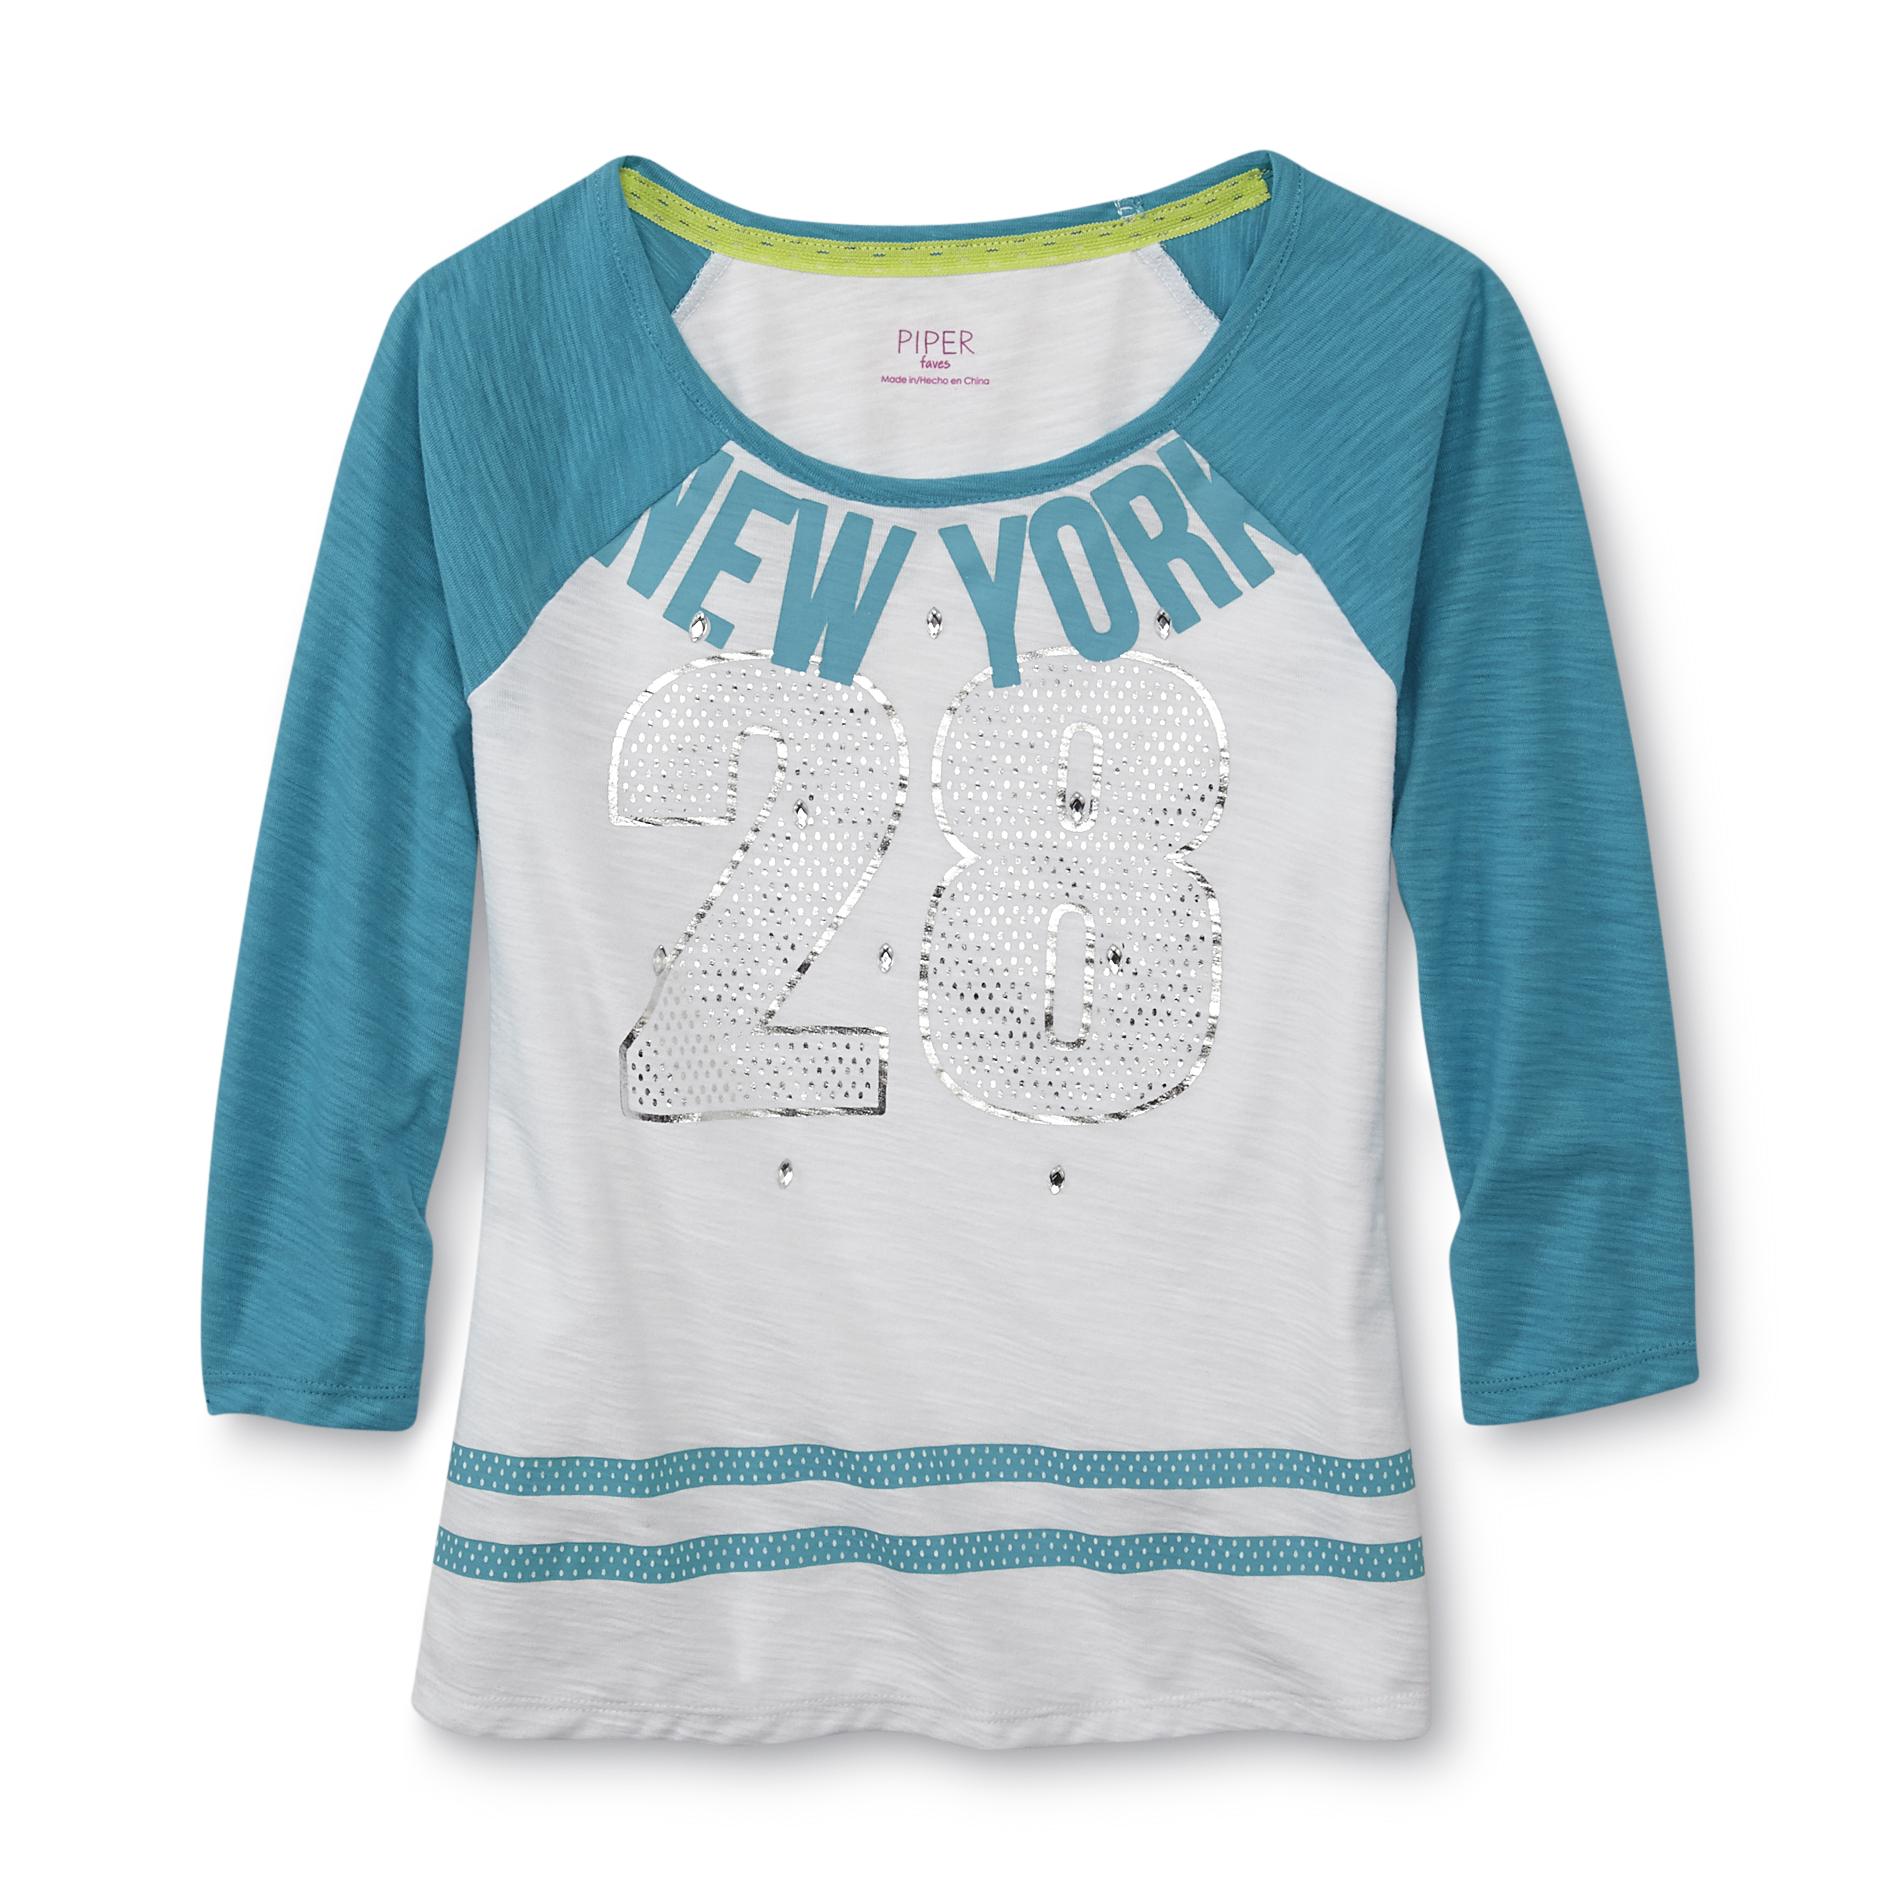 Piper Faves Girl's Raglan T-Shirt - New York 28